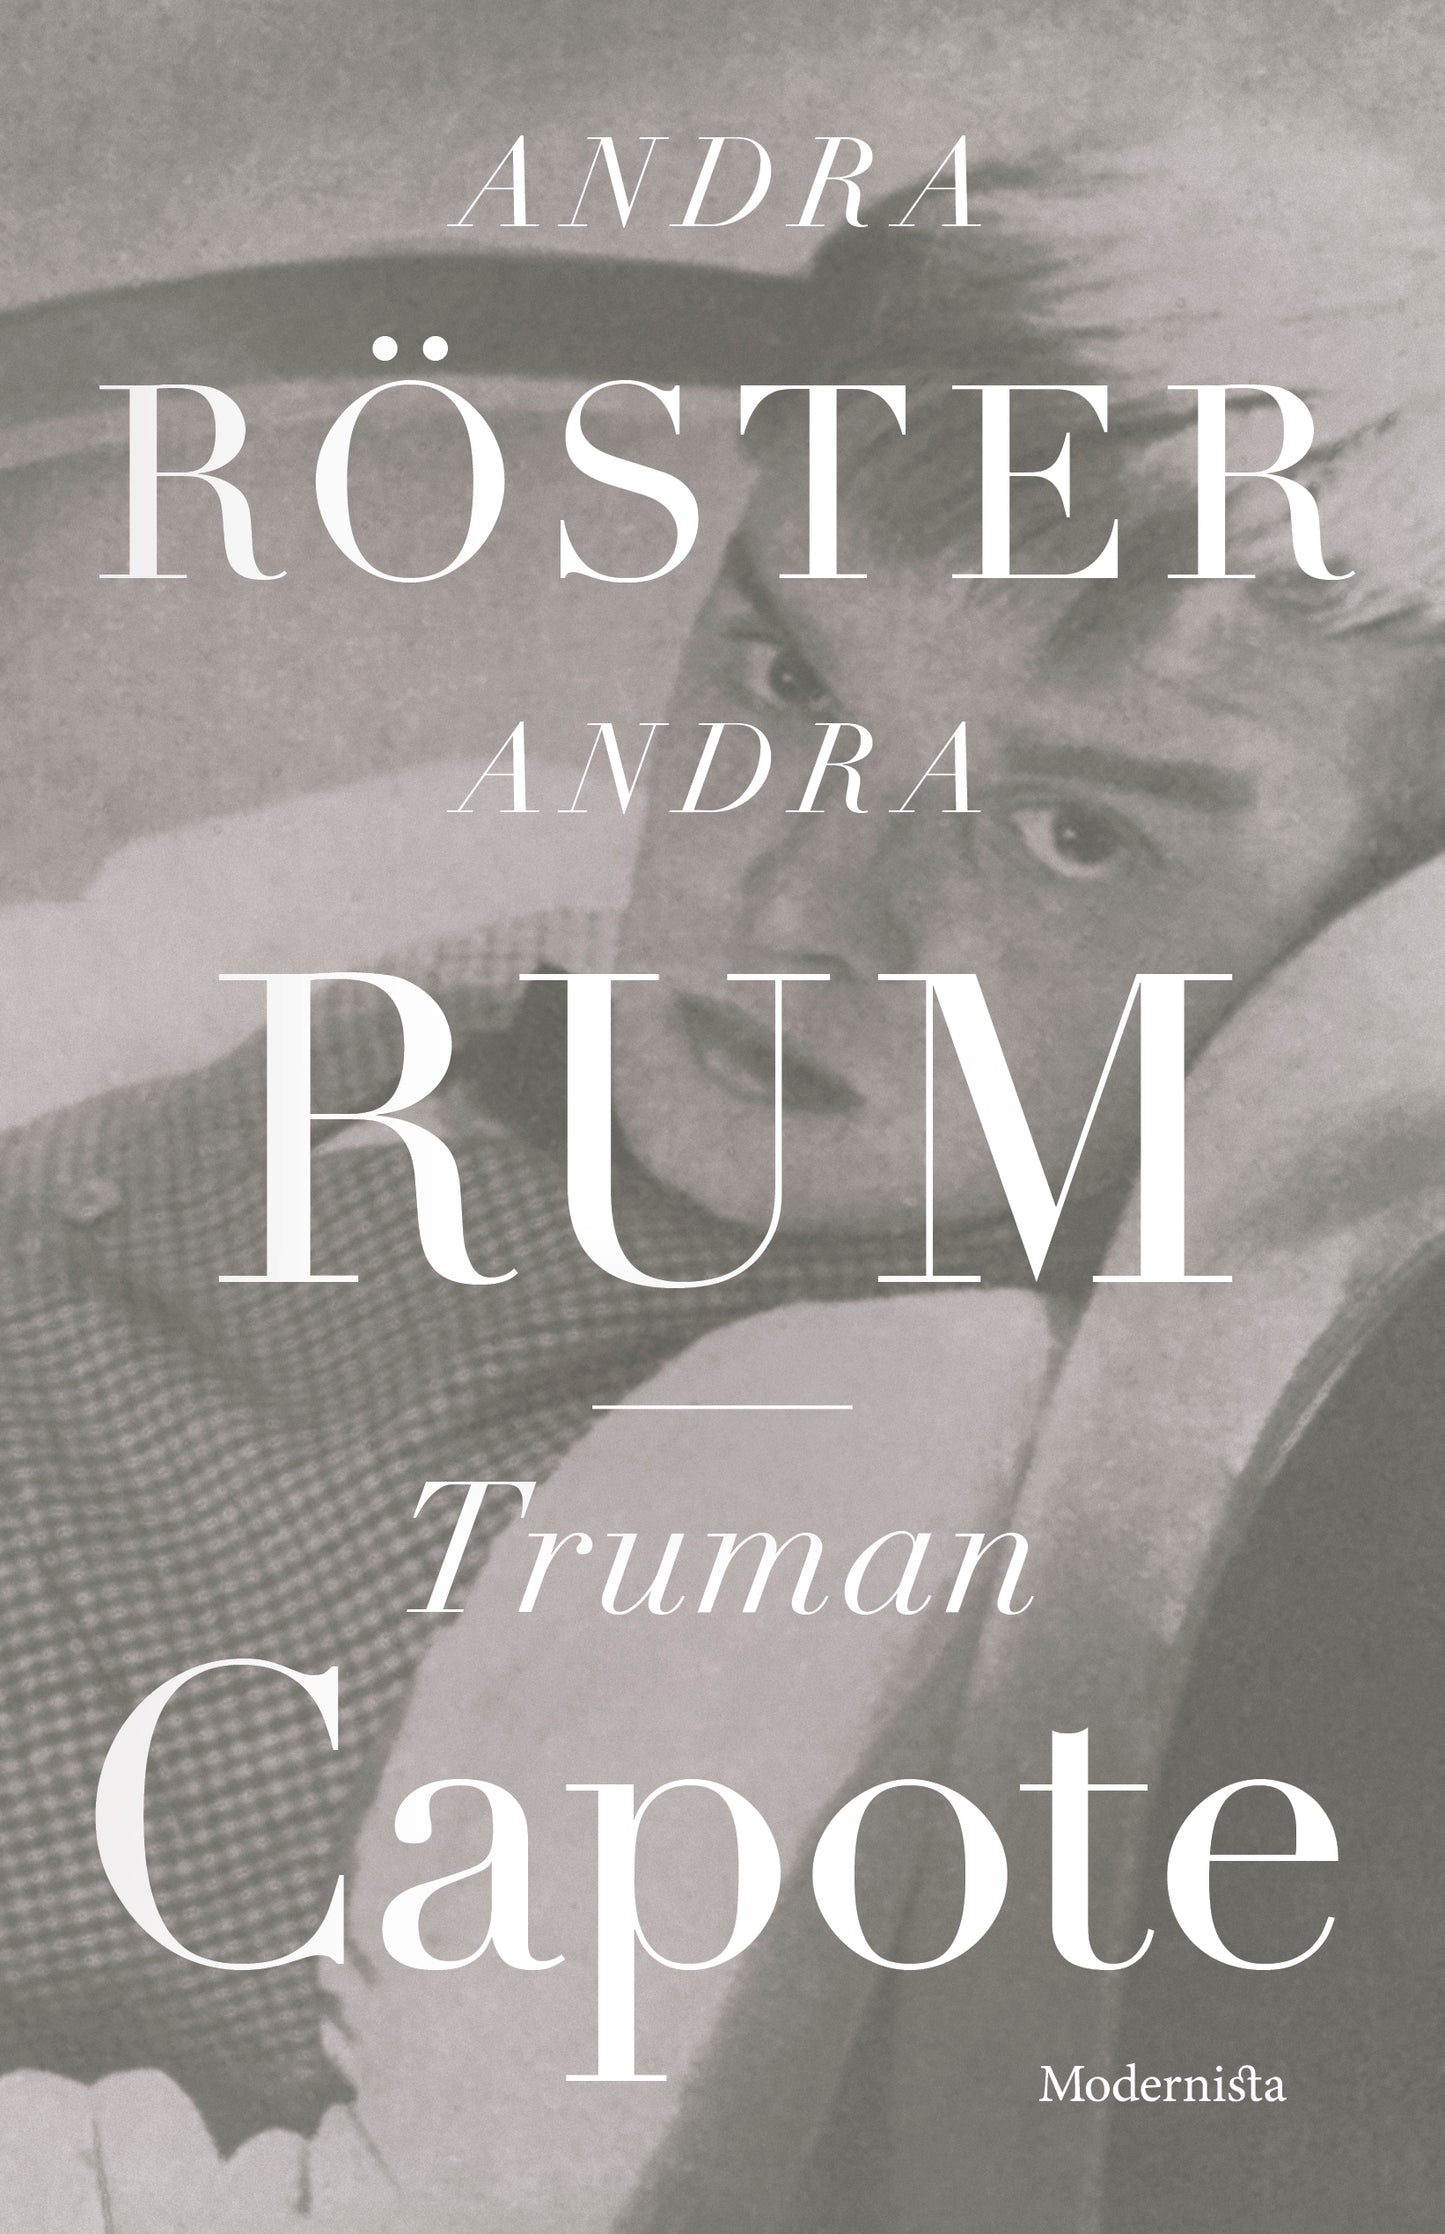 Andra röster, andra rum av Truman Capote